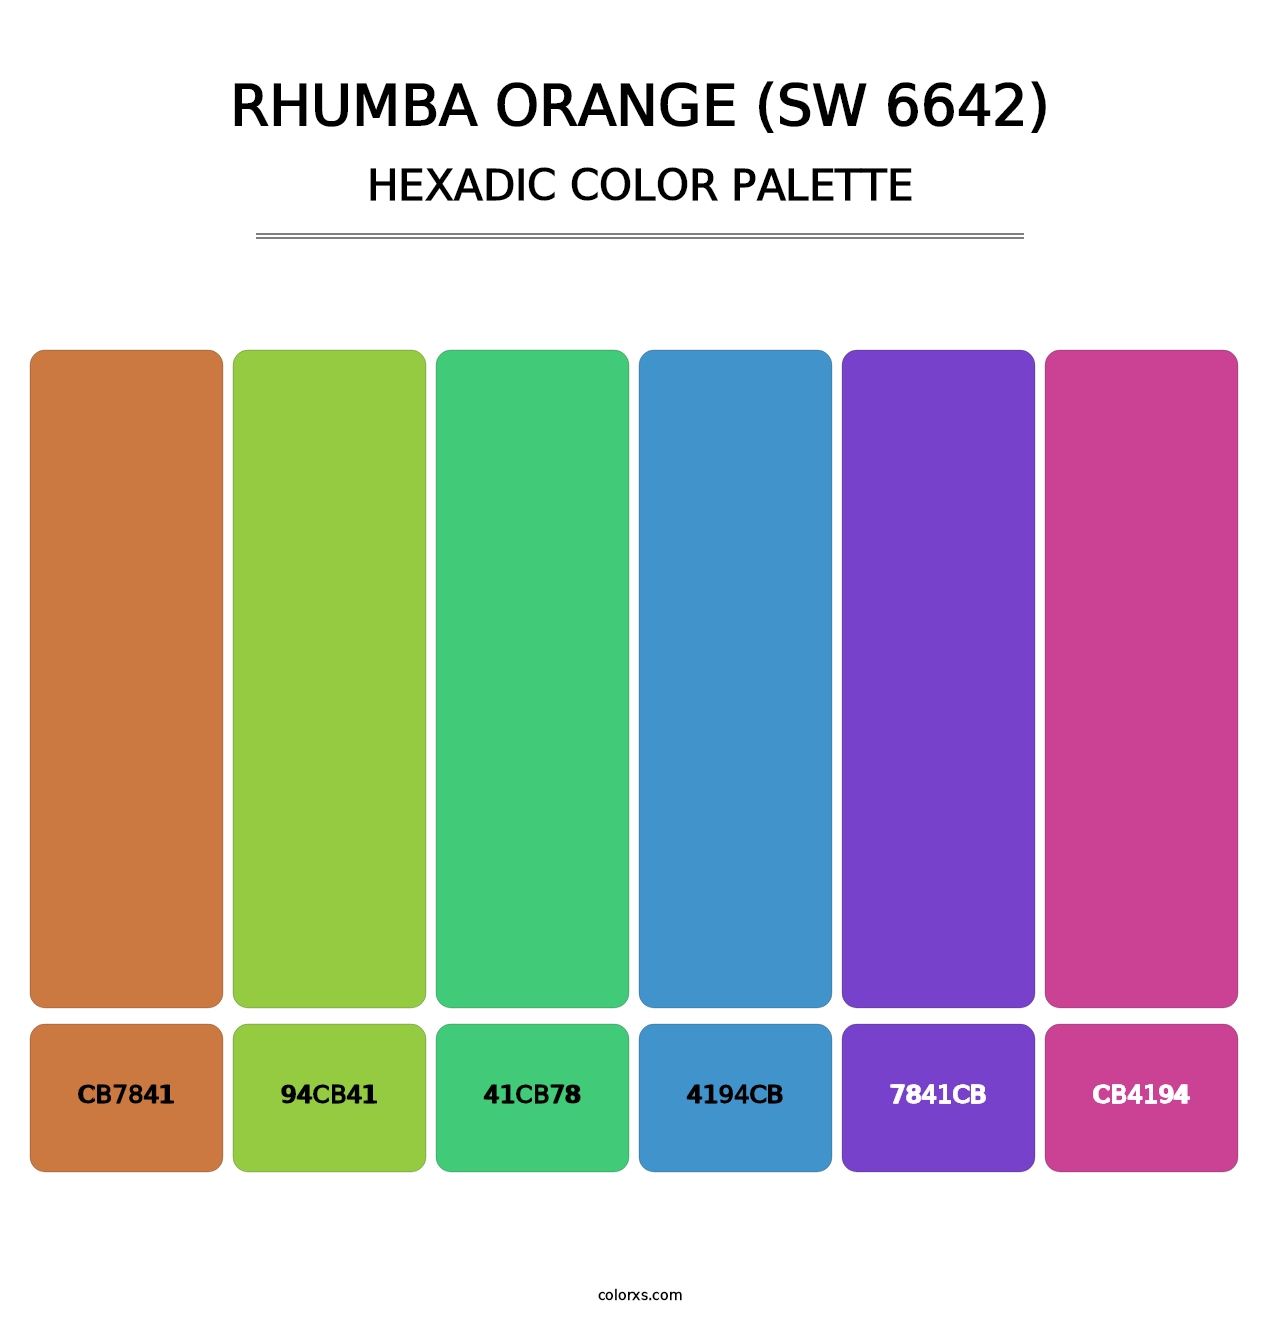 Rhumba Orange (SW 6642) - Hexadic Color Palette